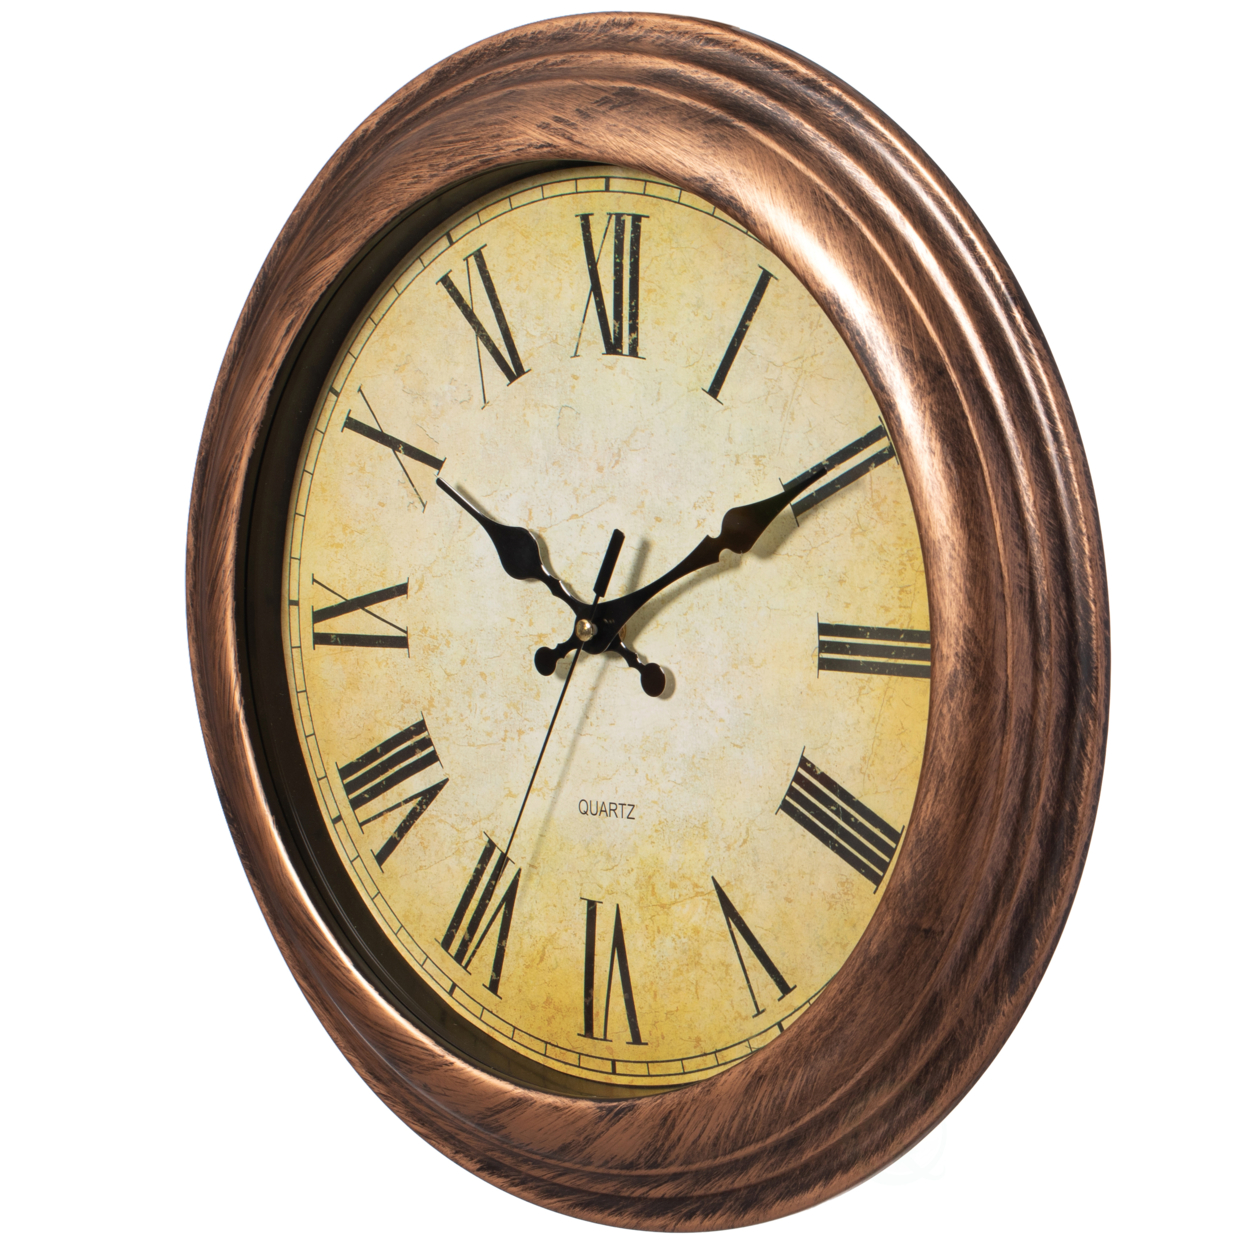 Retro Decor Bronze Rustic Wall Clock For Living Room, Kitchen, Dining Room, Plastic